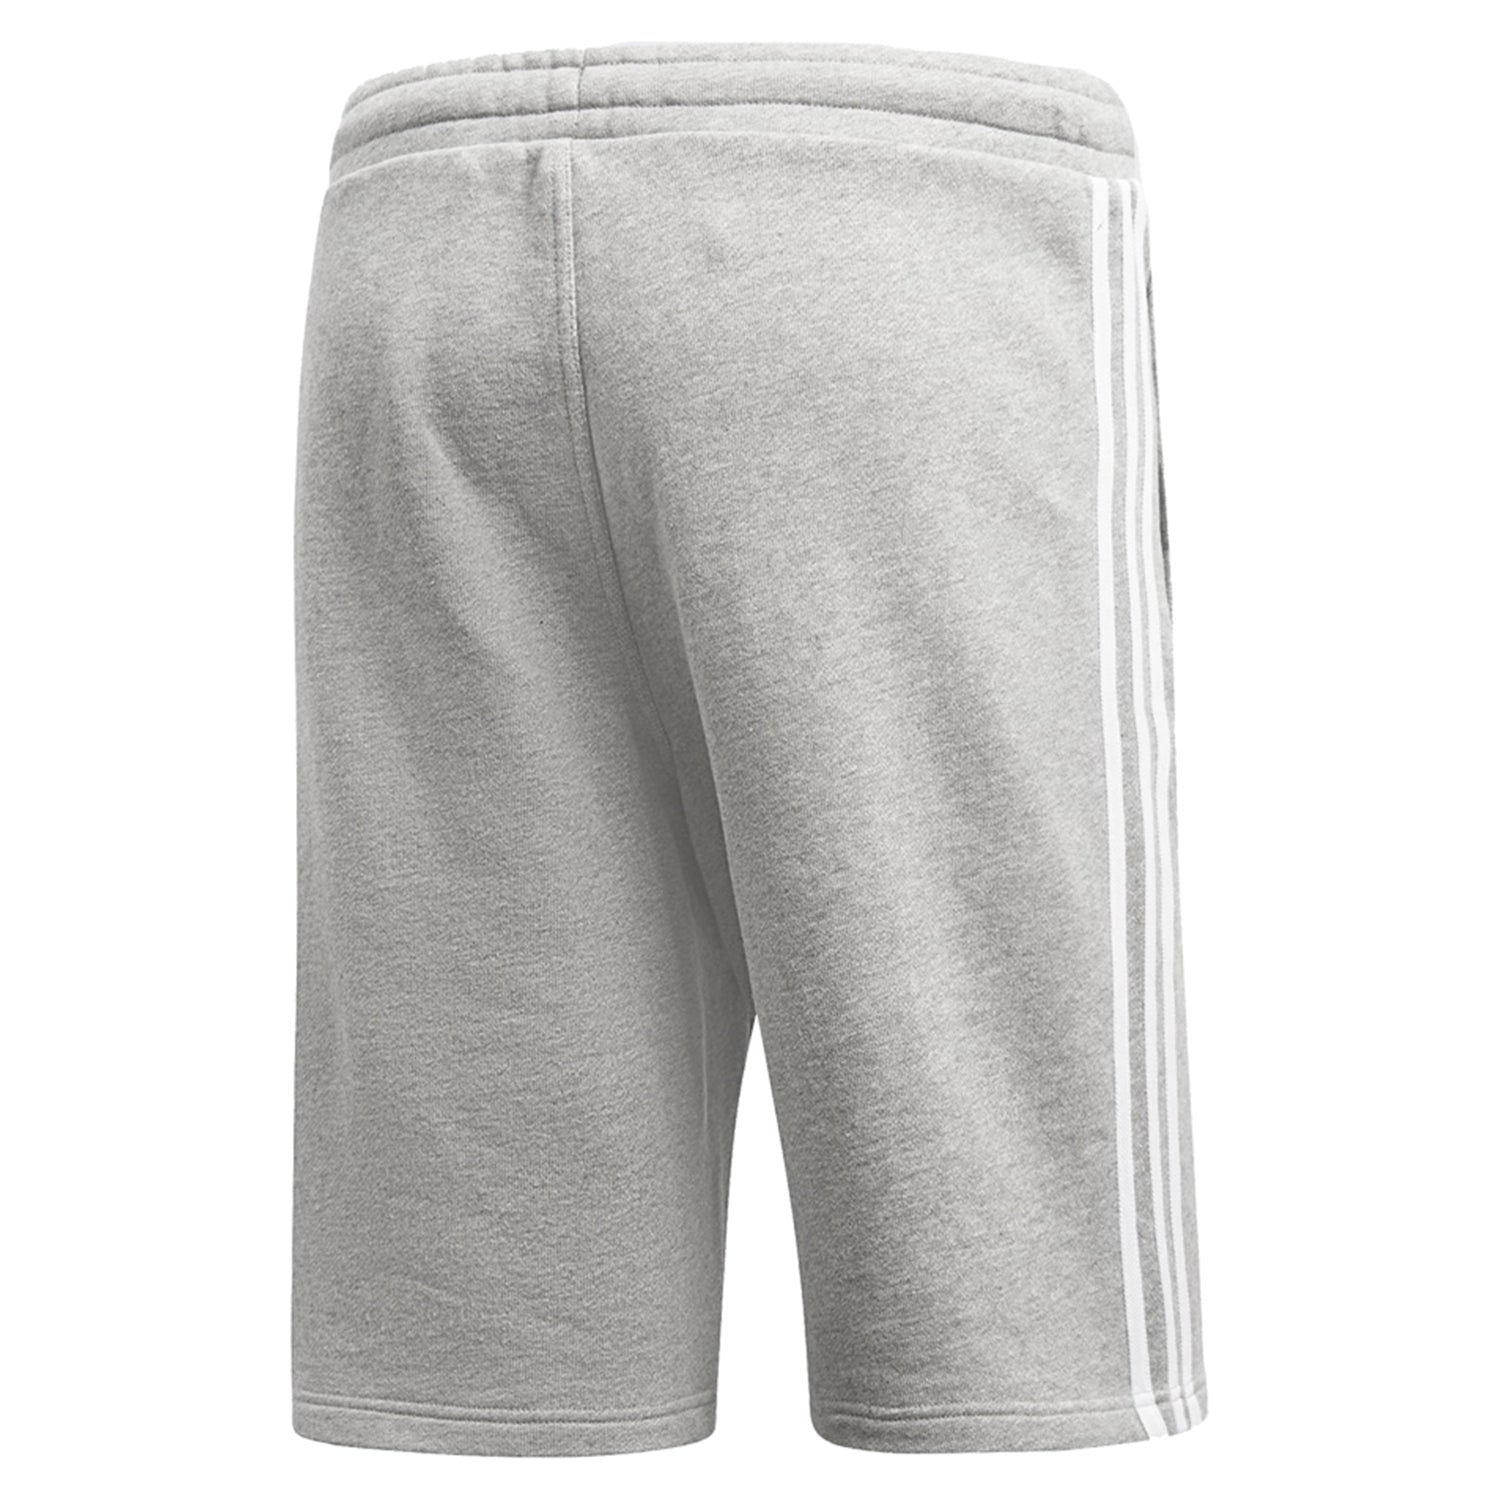 Adidas 3-stripes Shorts Mens Style : Dh5803